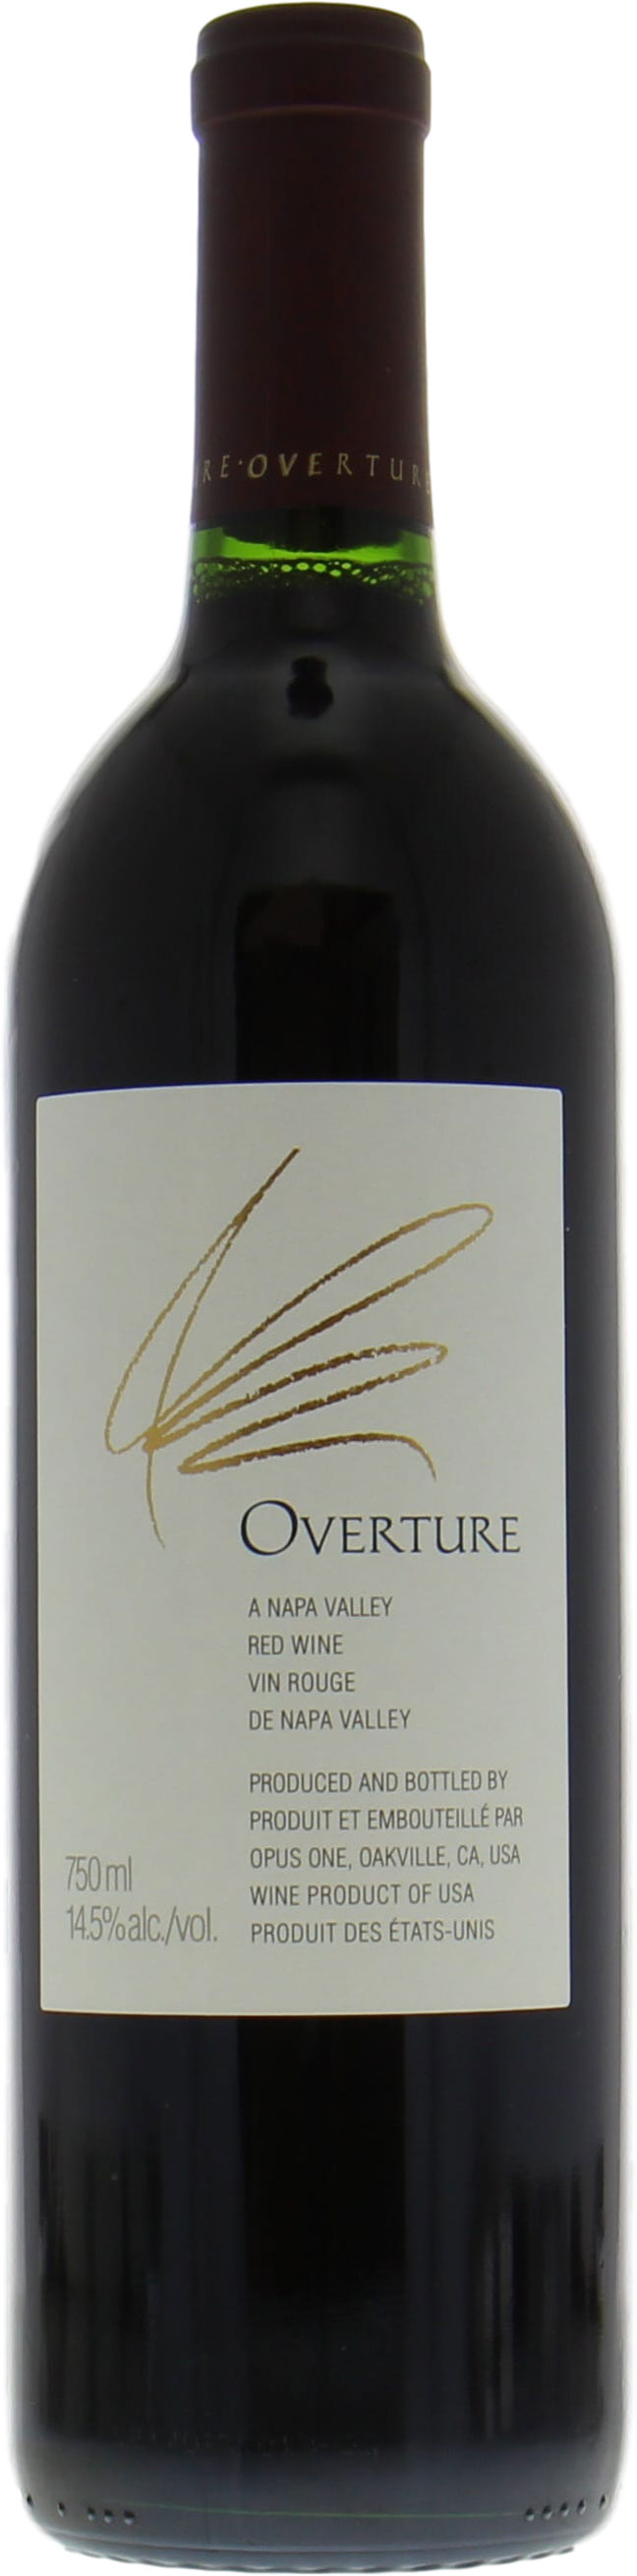 Overture release 2016 2016 - Opus One | Best of Wines